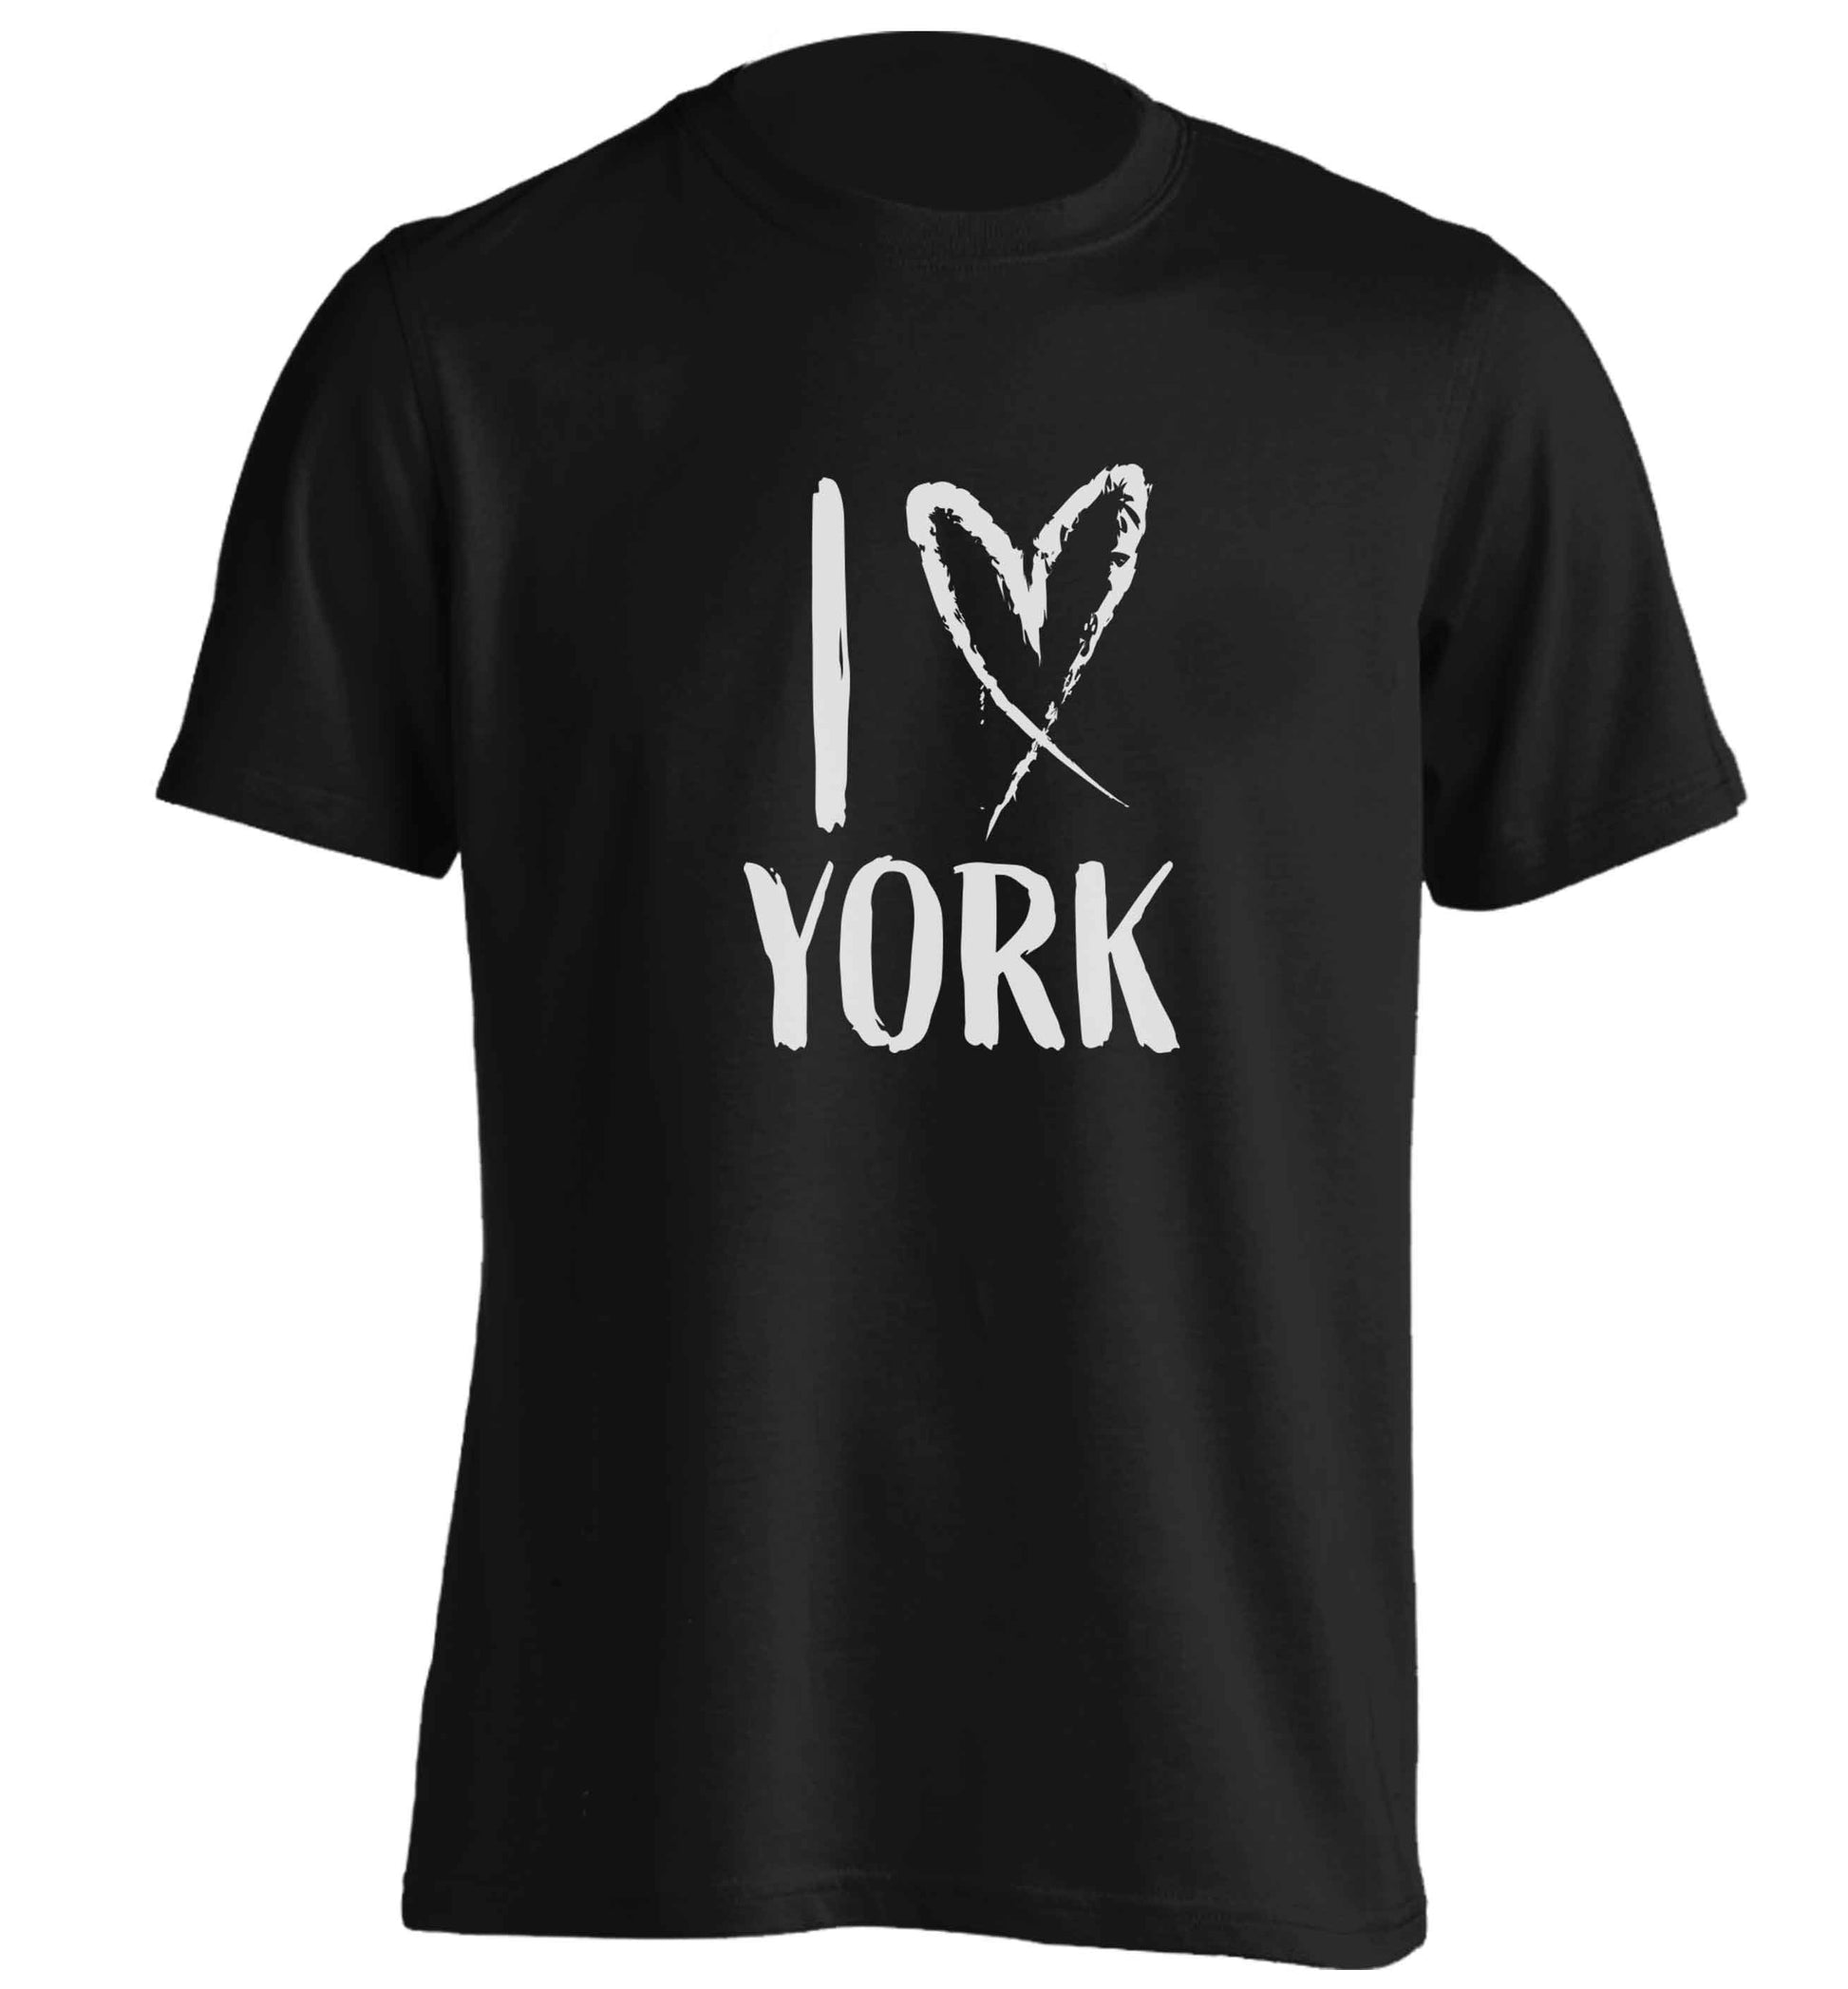 I love York adults unisex black Tshirt 2XL